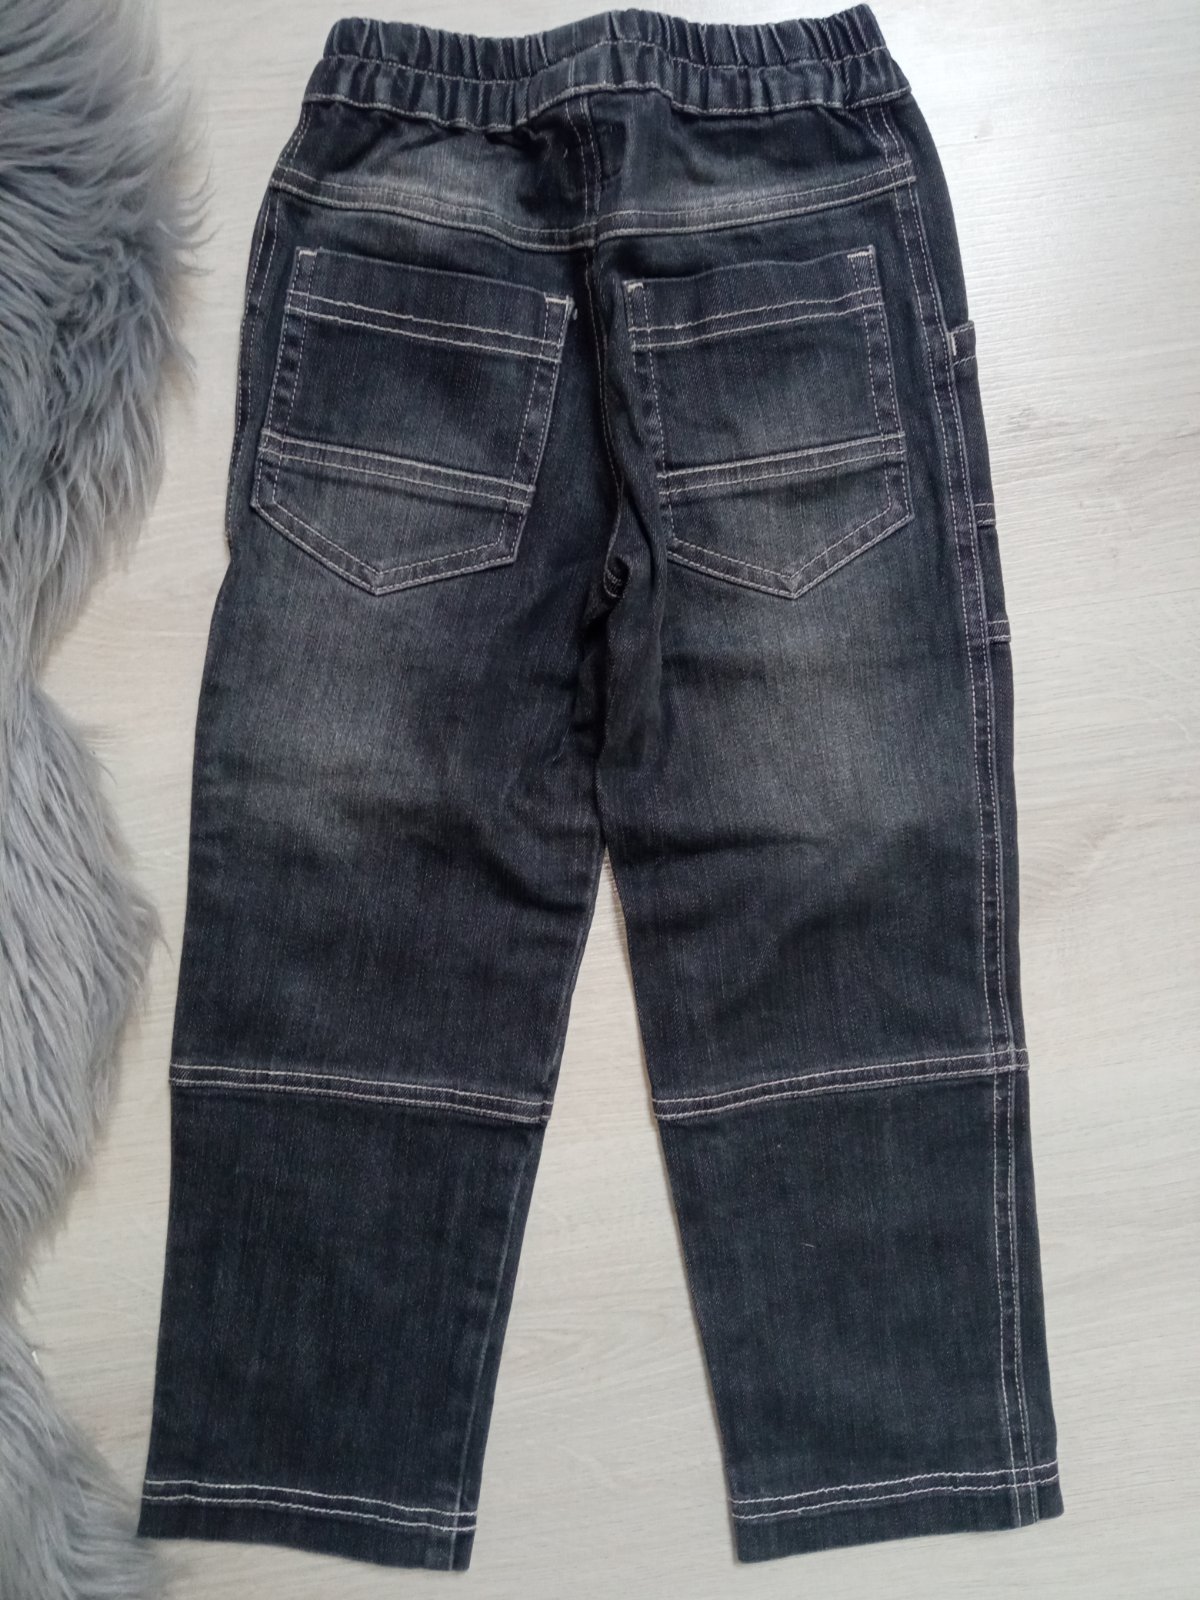 Sivé vyšúchané džínsy na gumu v páse (110)